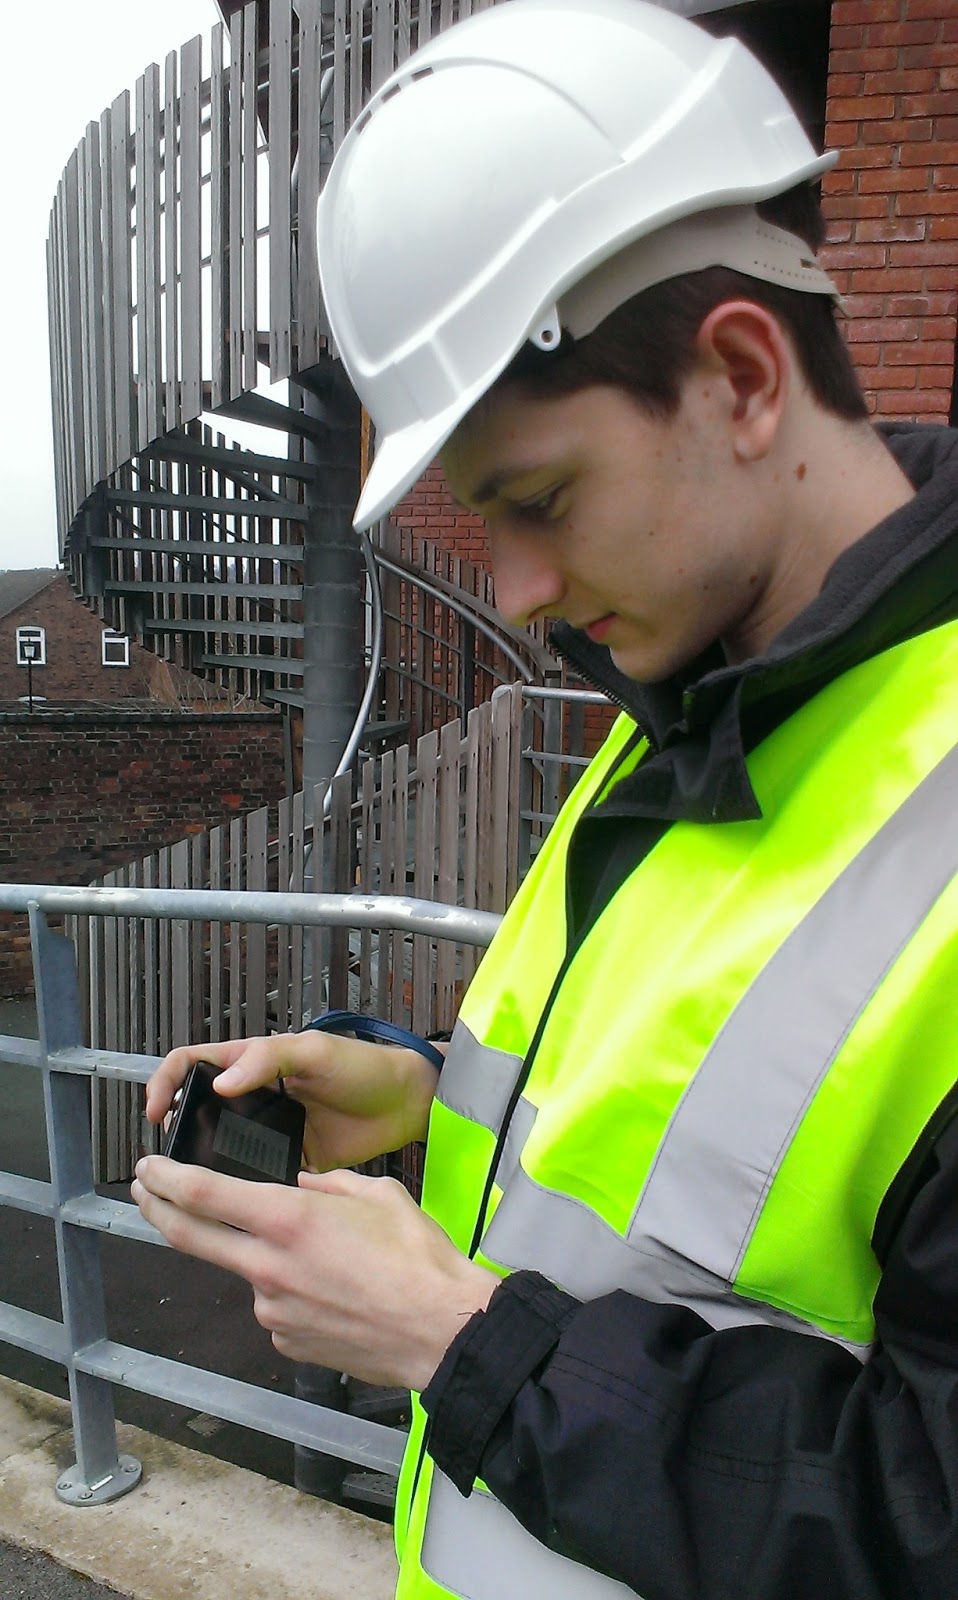 Tracker Mobile helps asbestos sampling in the field